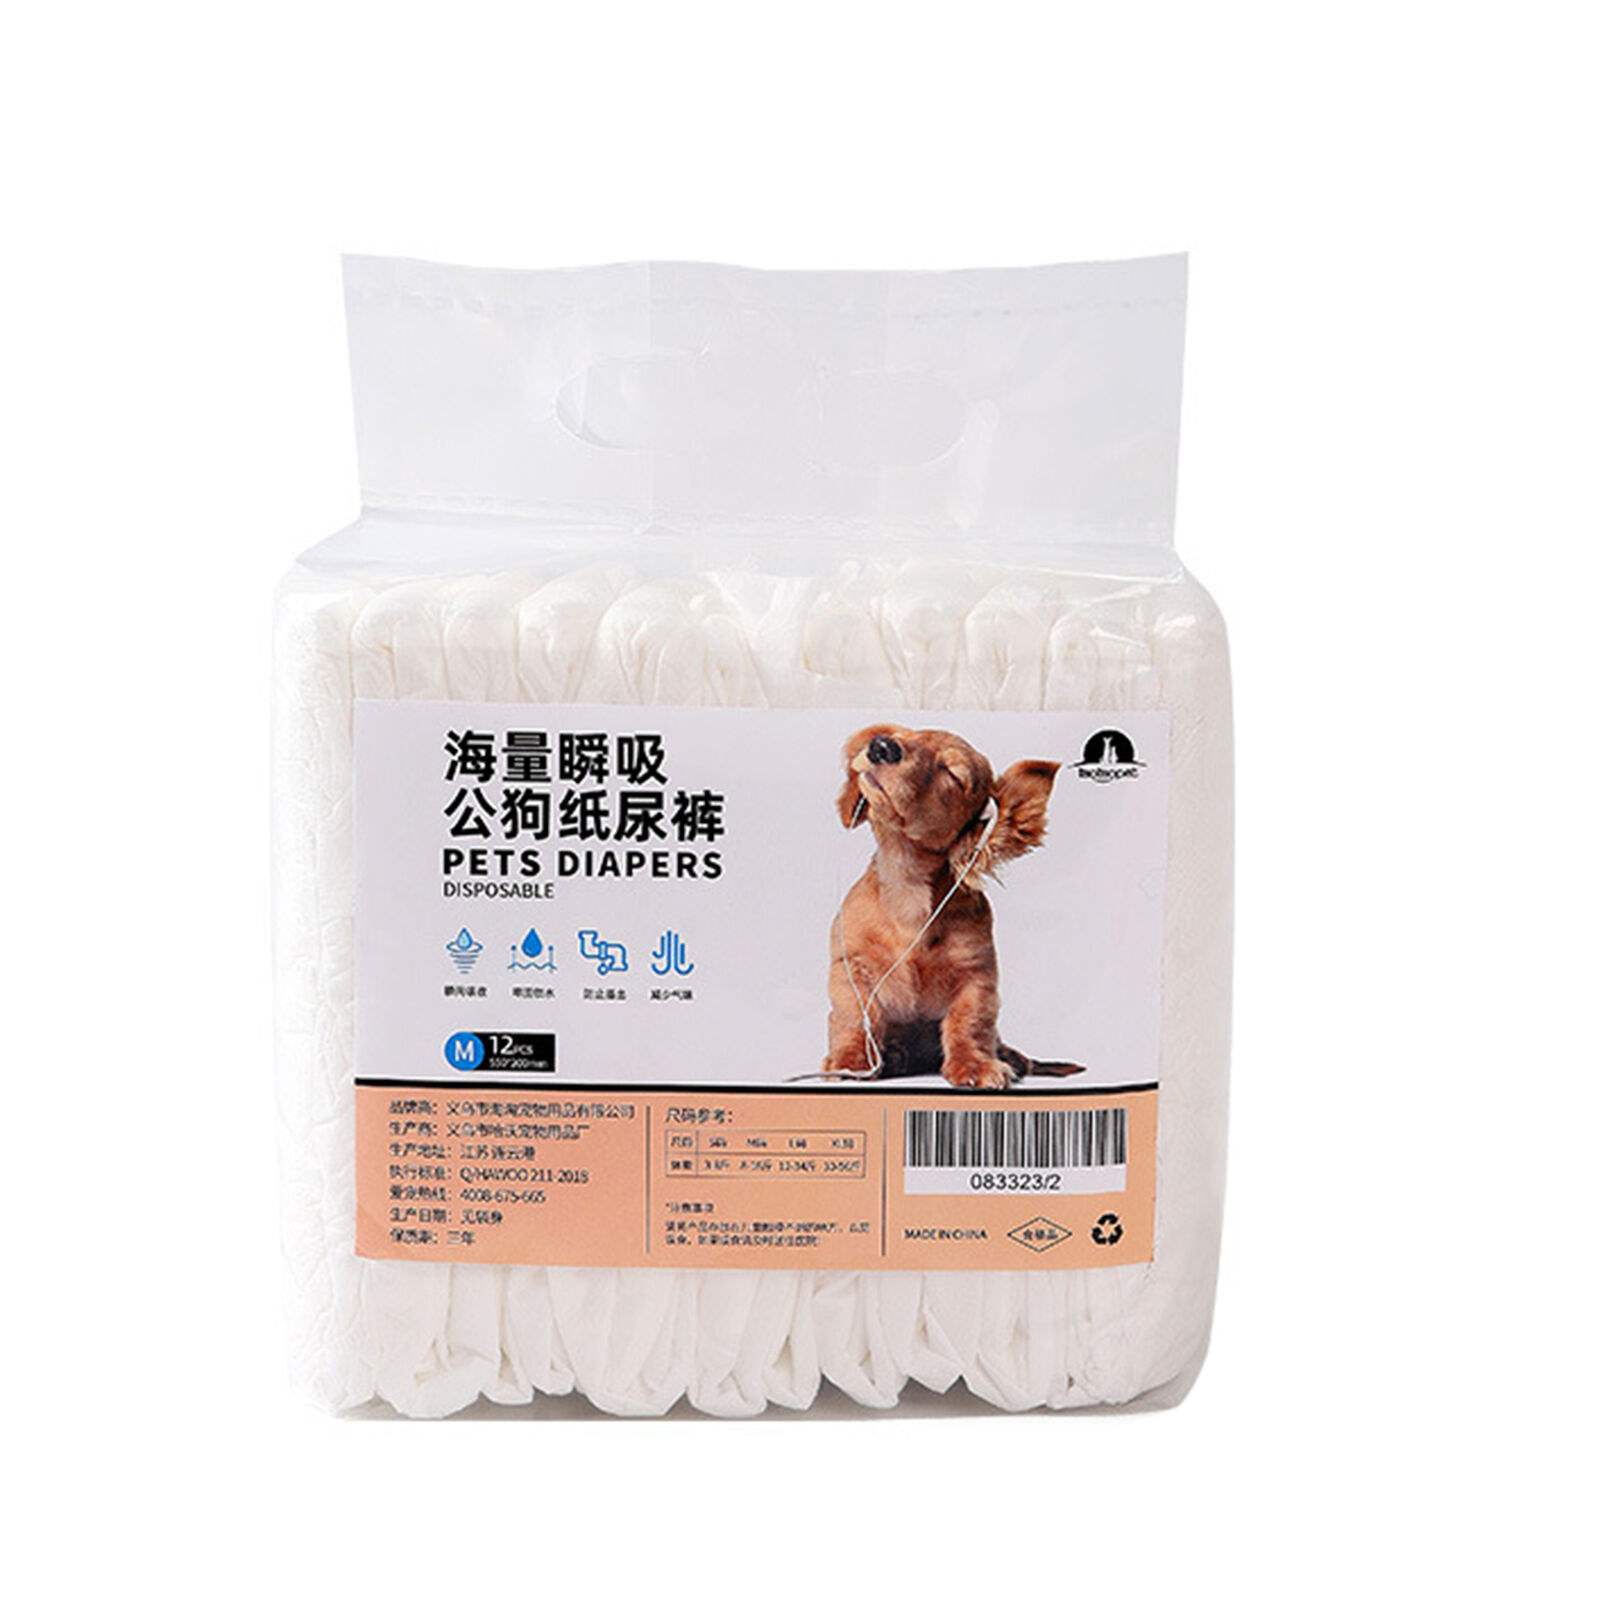 12pcs Pet Sanitary Pants Soft Touch Tear-resistant Disposable Dog Sanitary Pants Unbranded - фотография #9